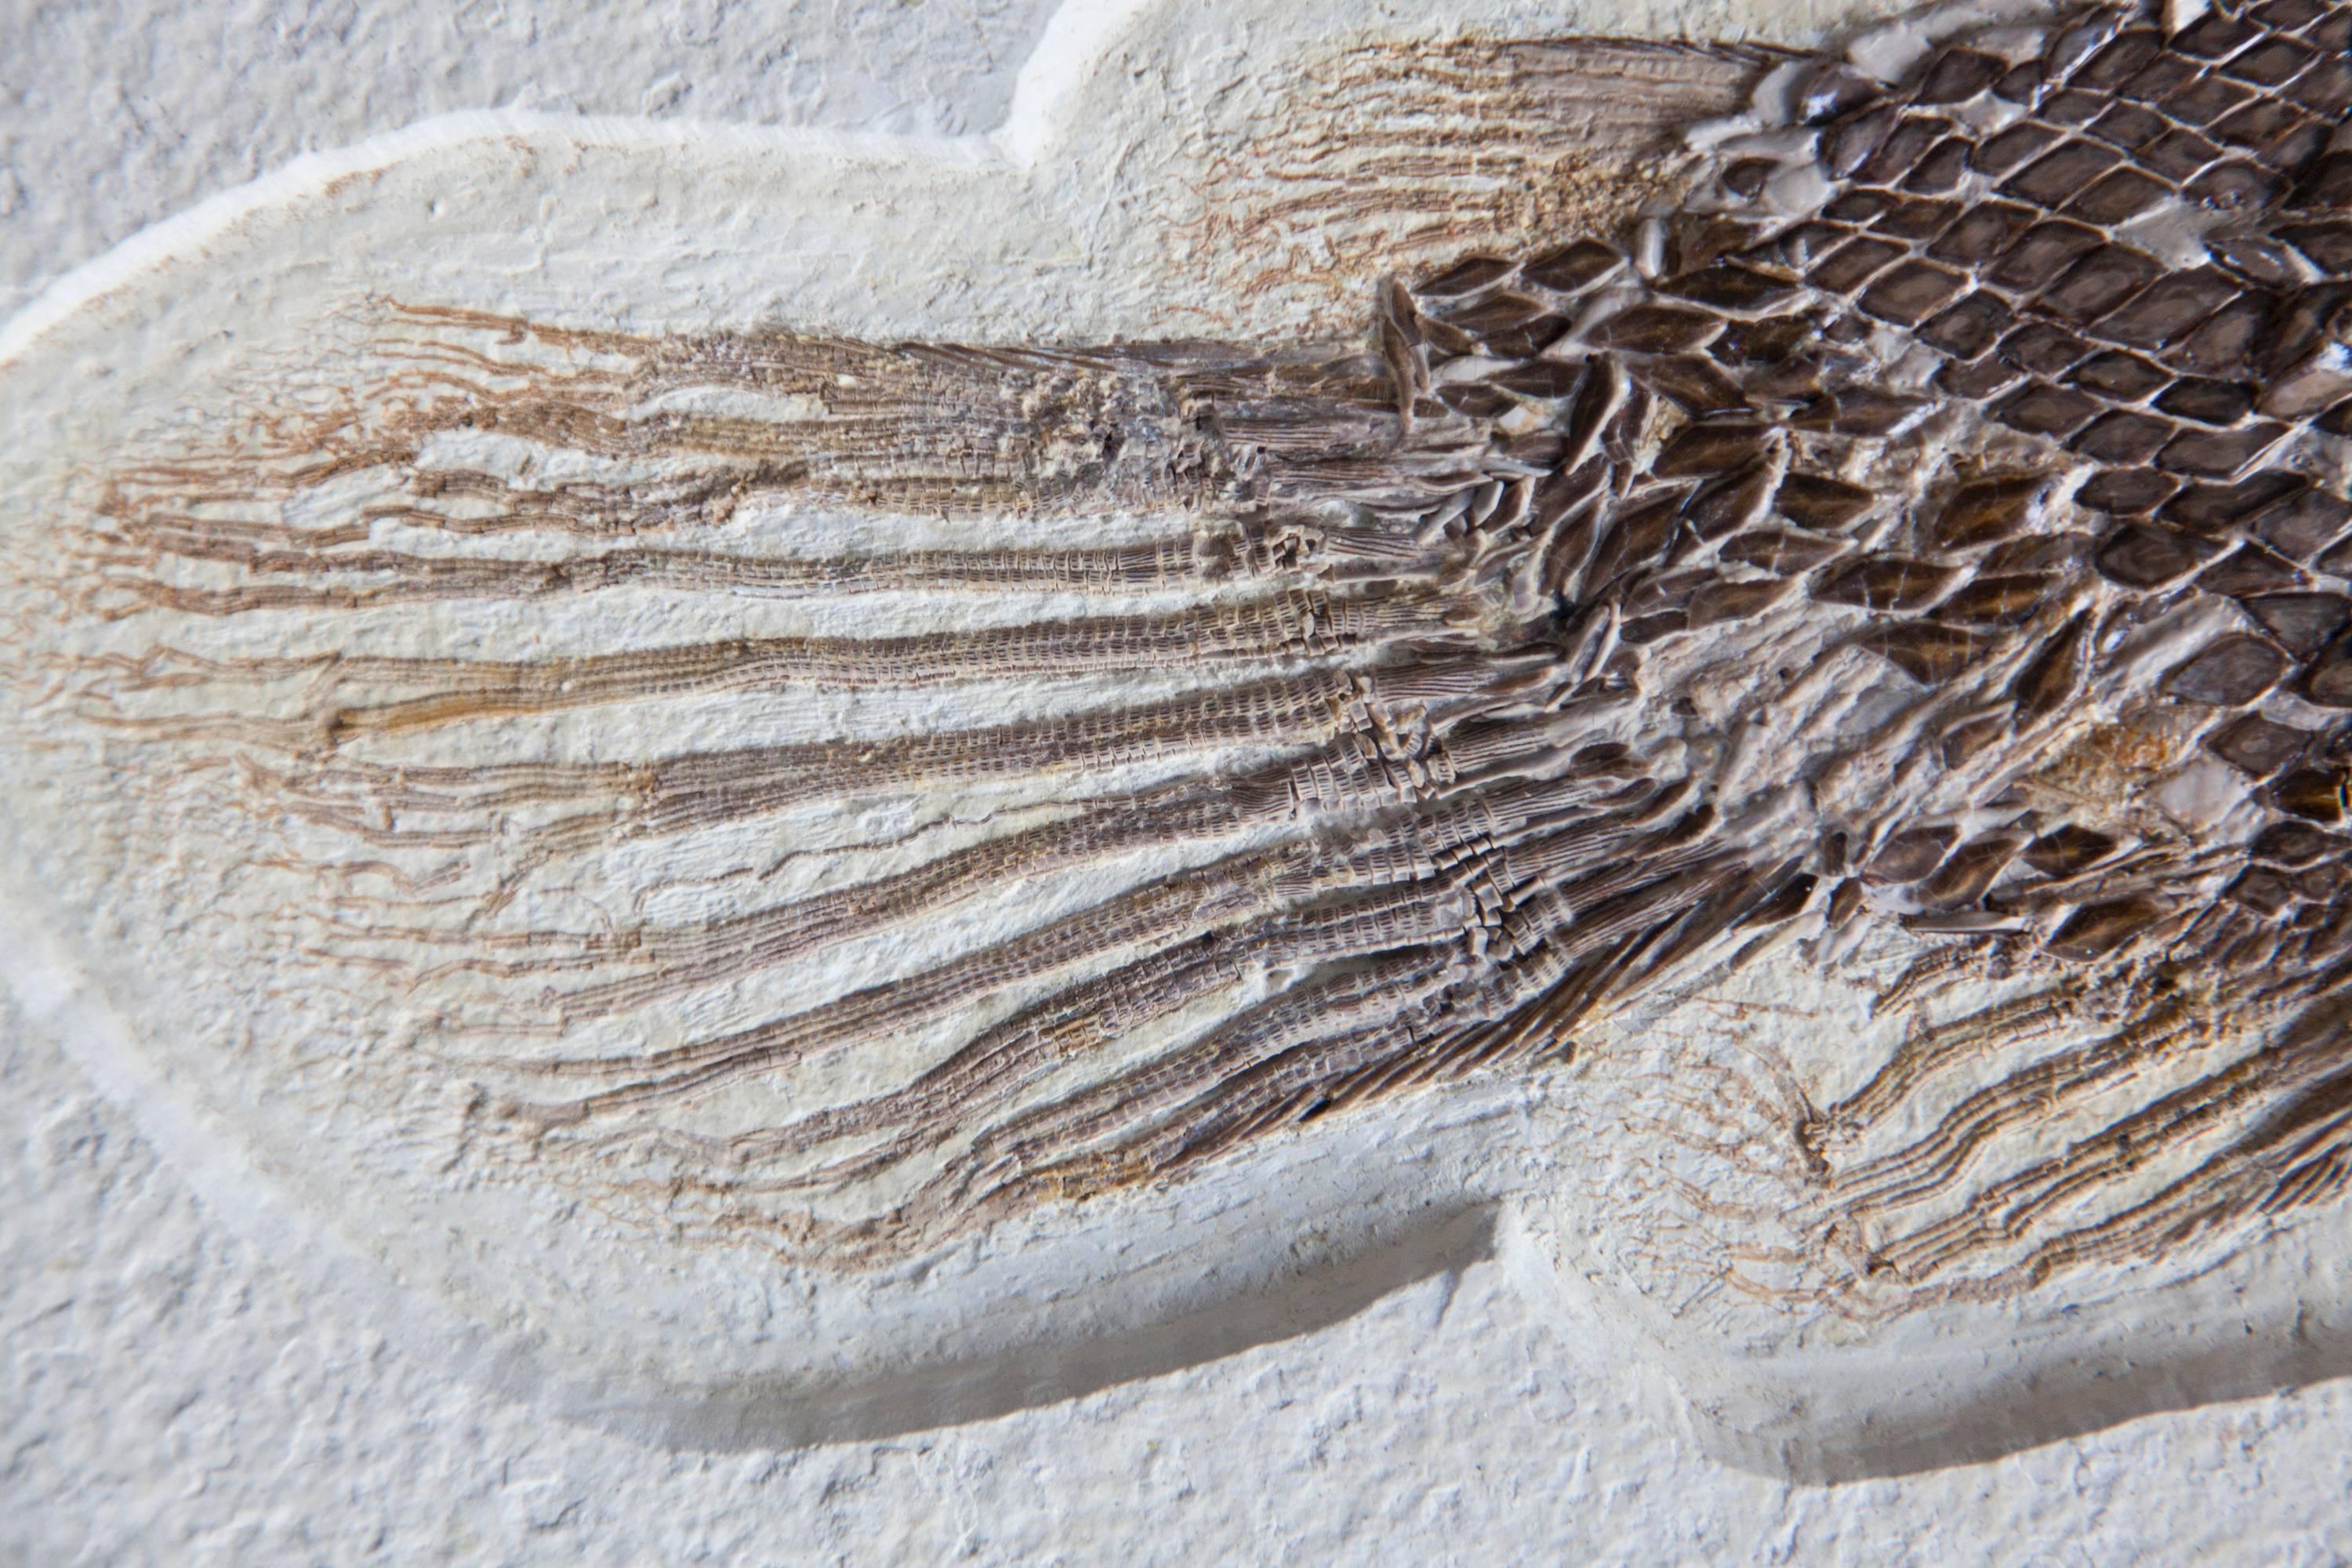 gar fish fossil